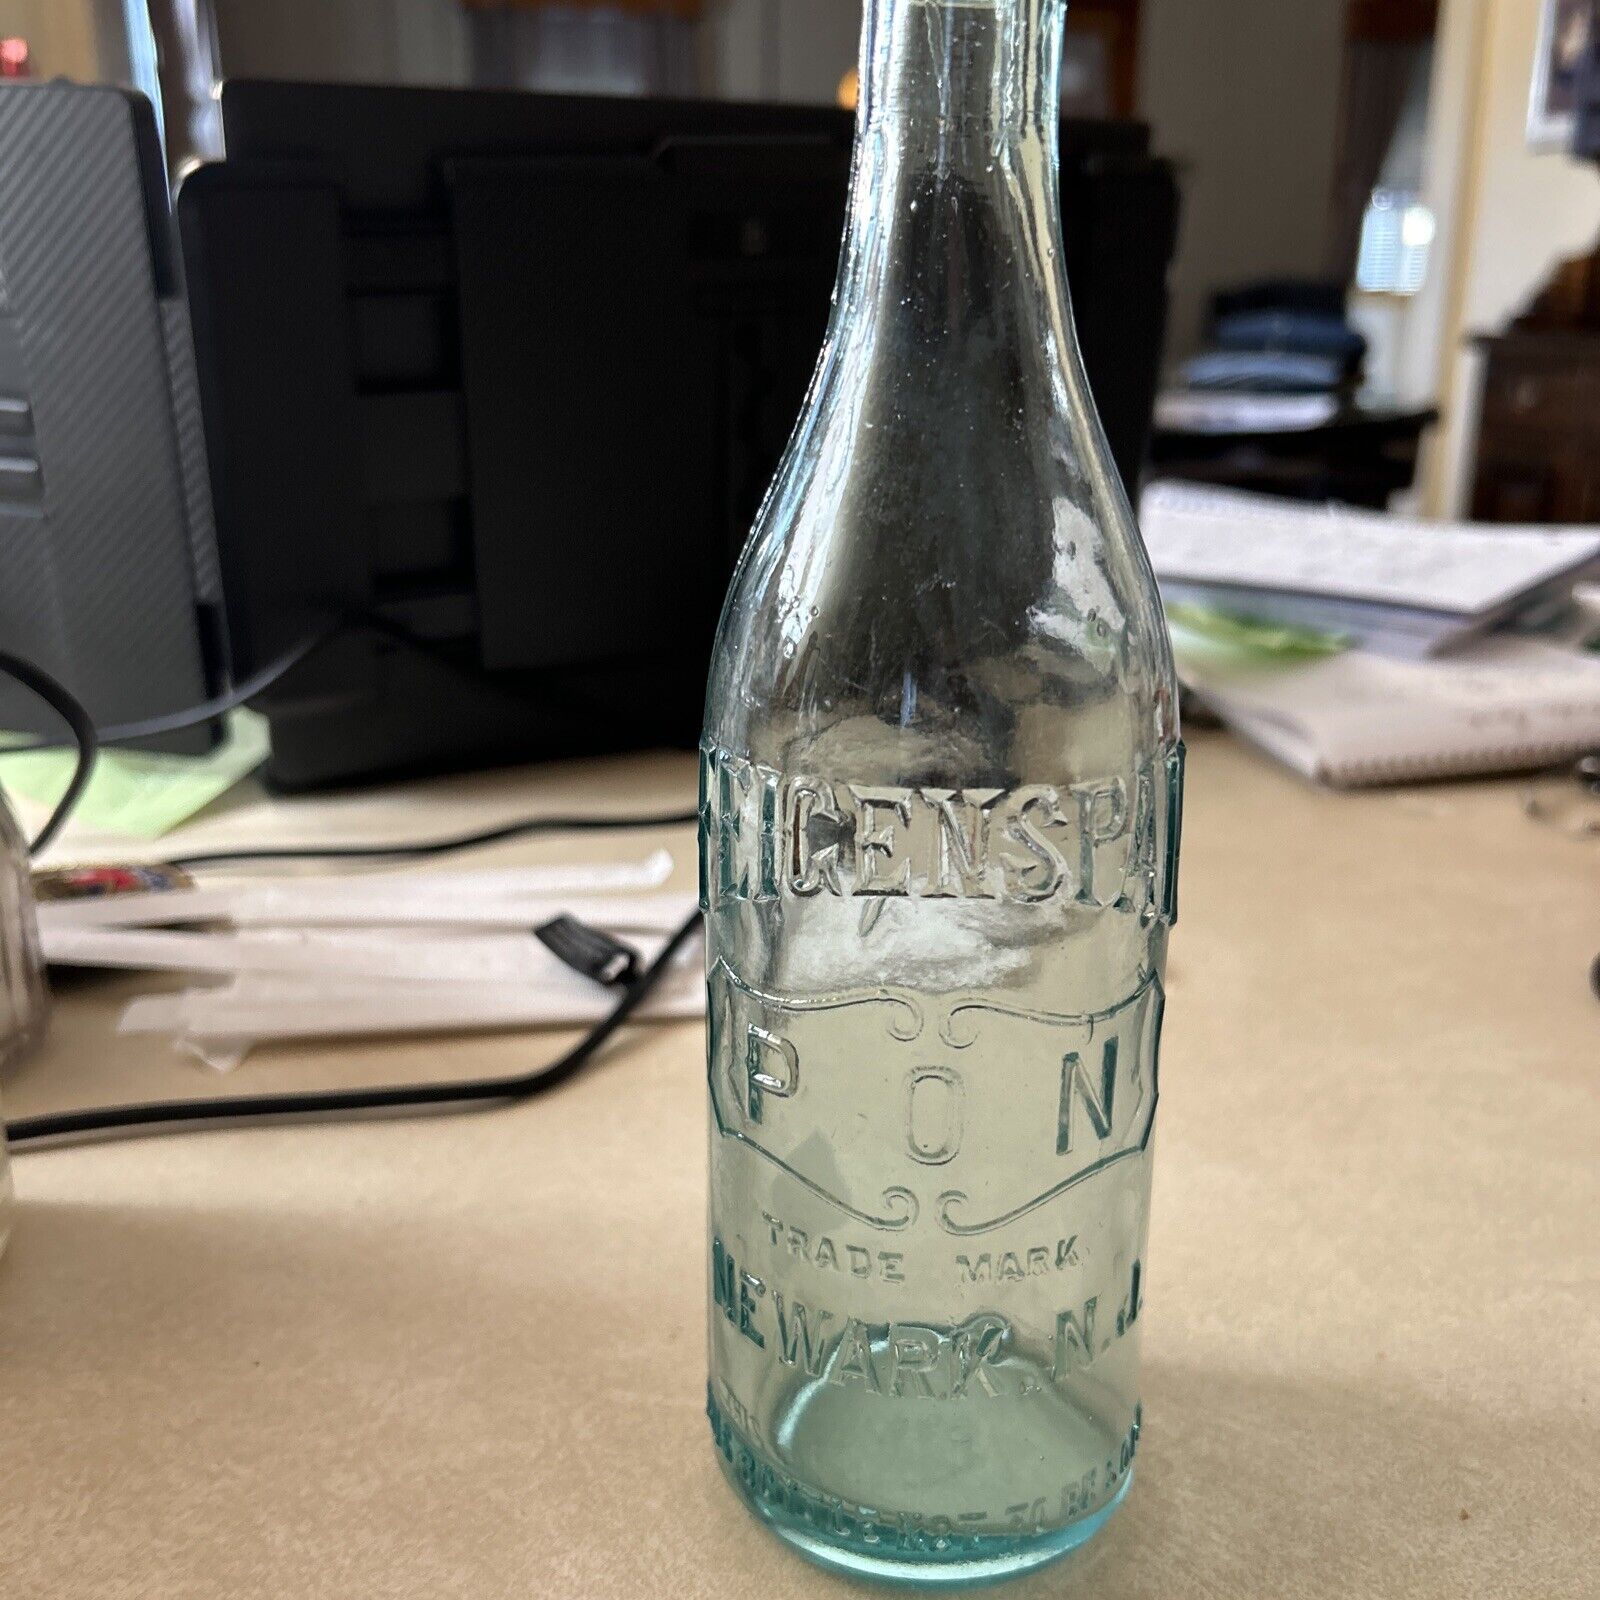 Feigenspan Pon Newark Nj Vintage Bottle